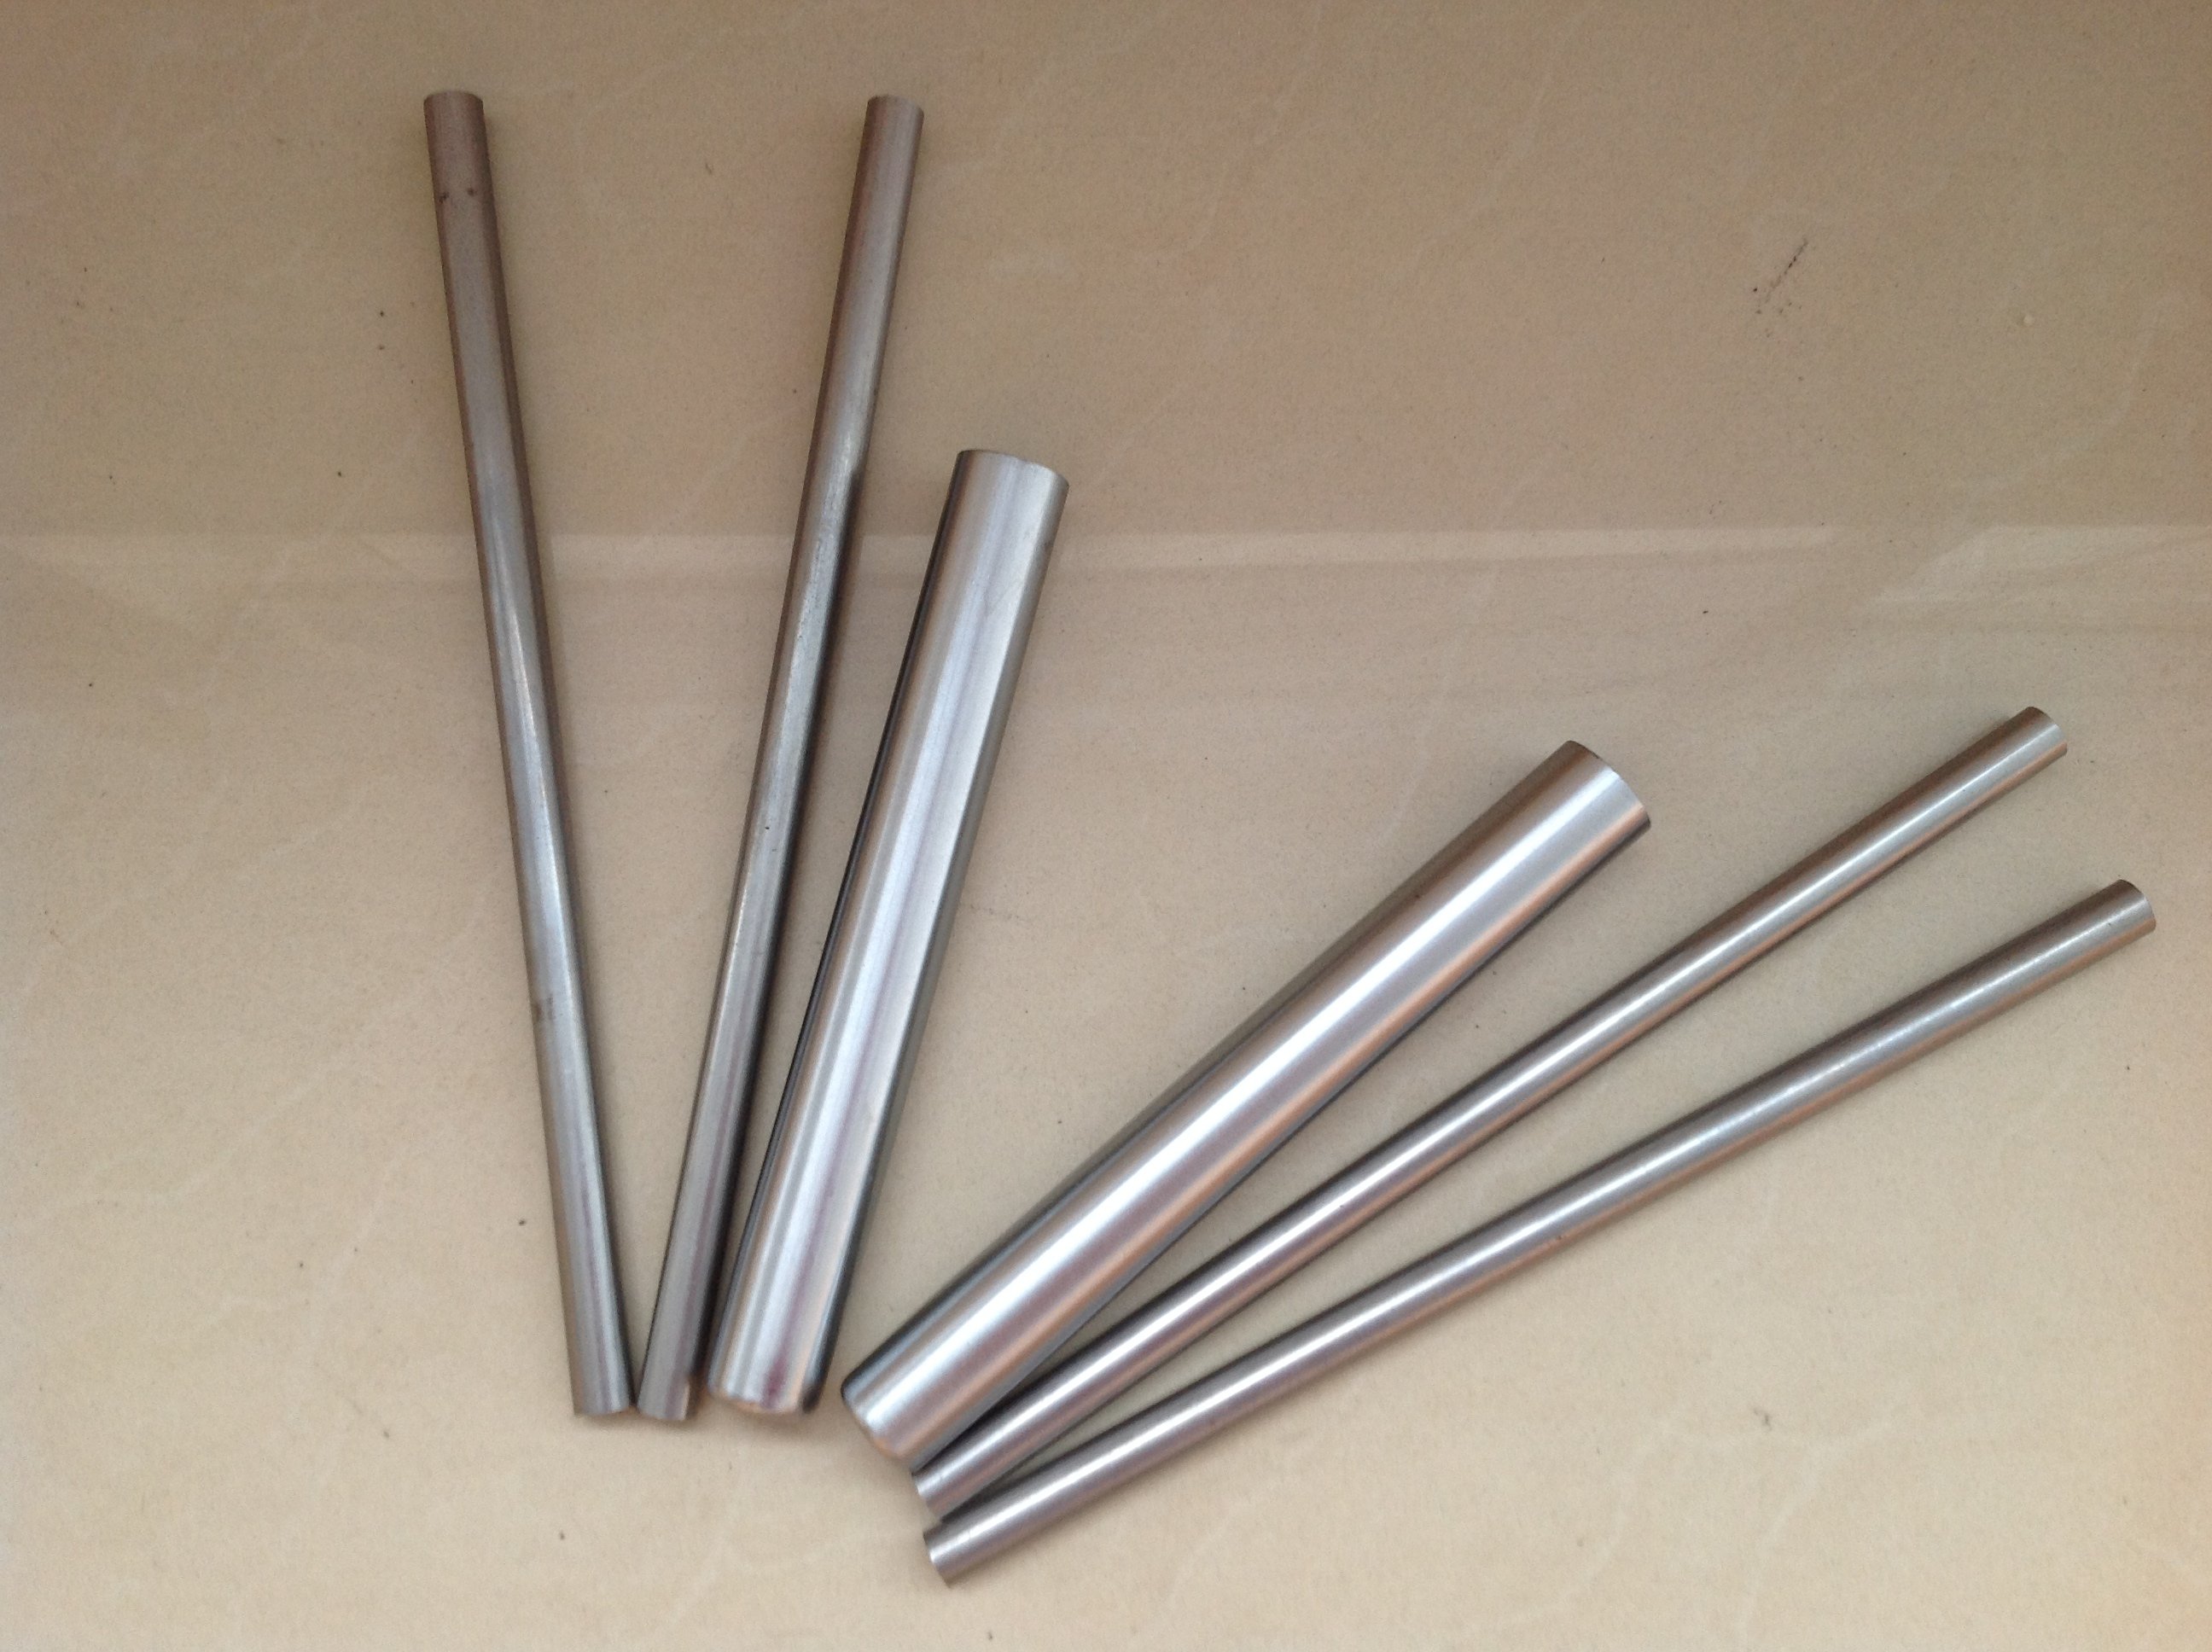 EN10305-1standard precision seamless steel tube for shock absorber